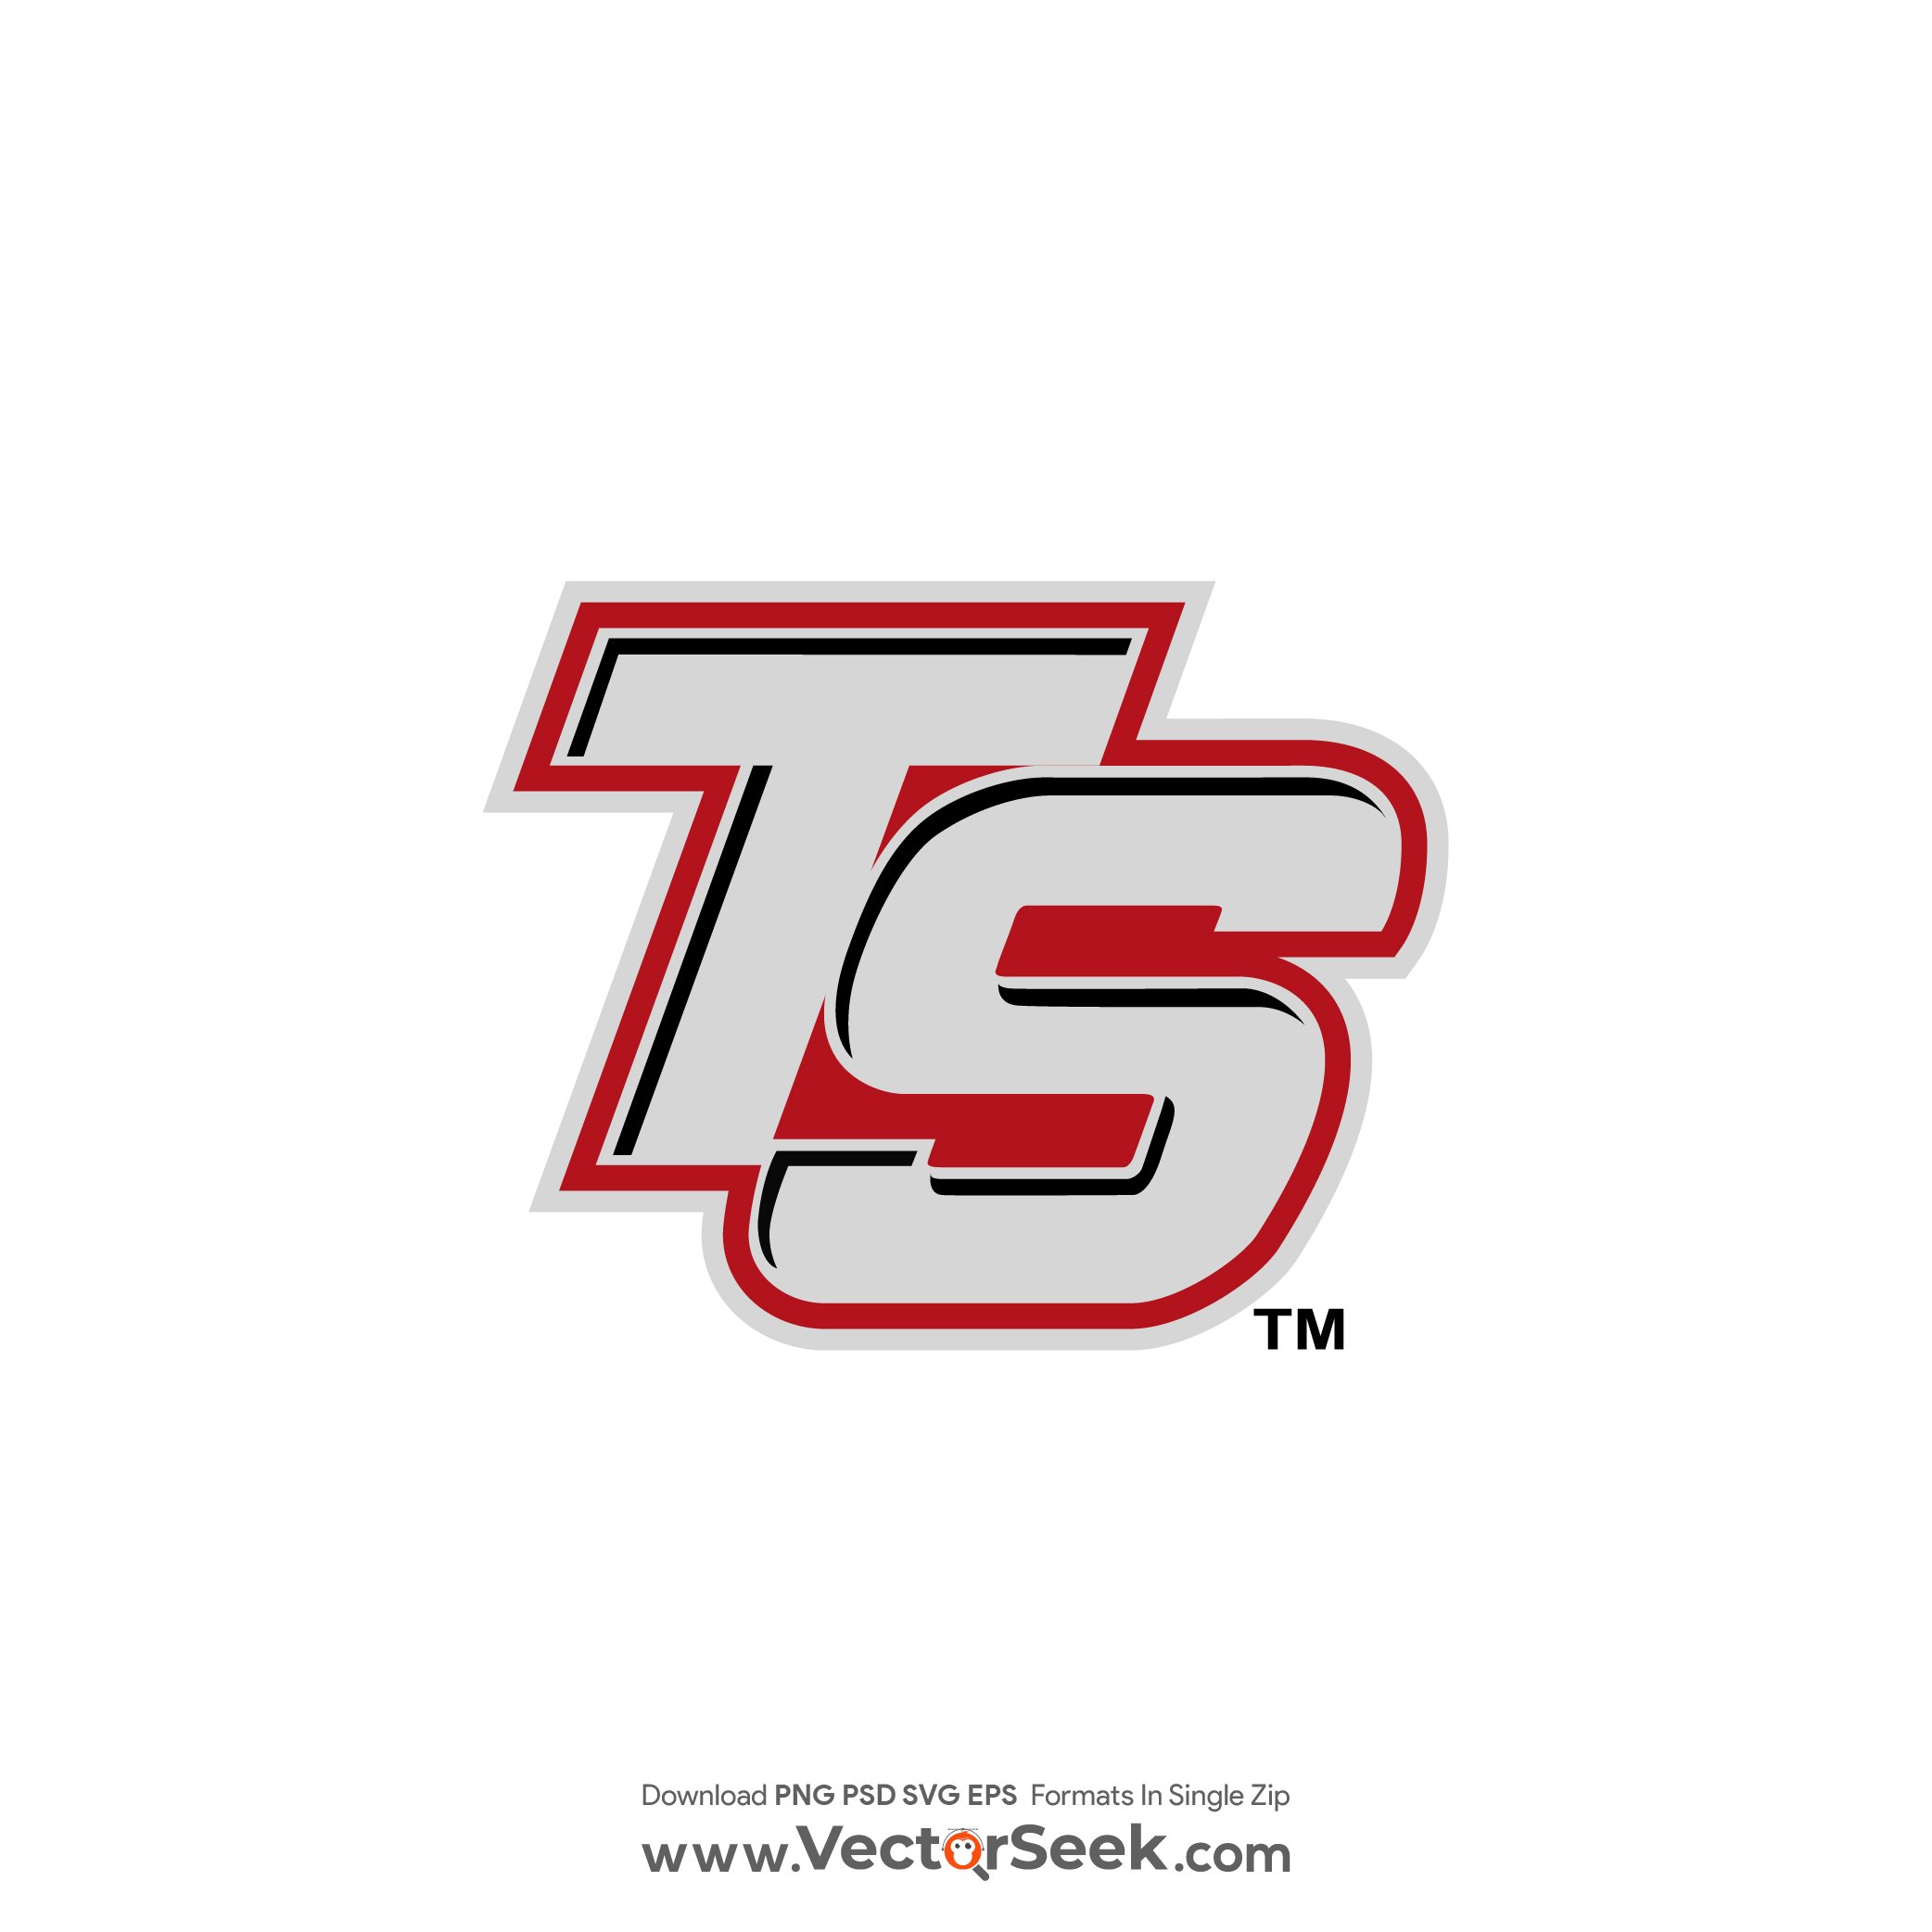 TS Logo Vector